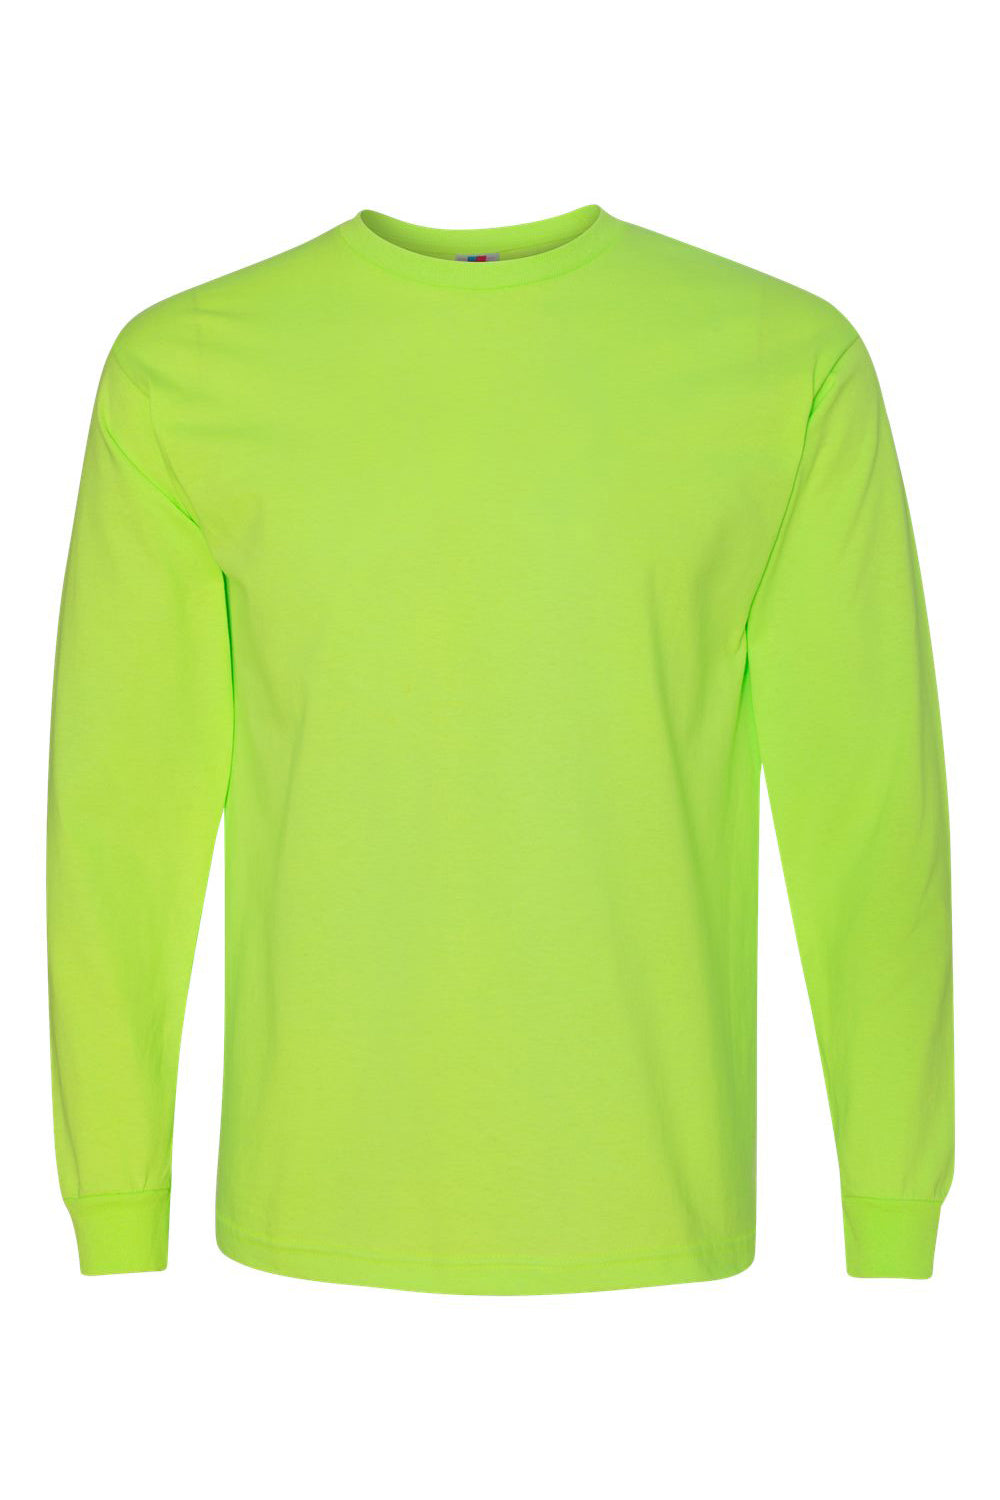 Bayside BA5060 Mens USA Made Long Sleeve Crewneck T-Shirt Lime Green Flat Front